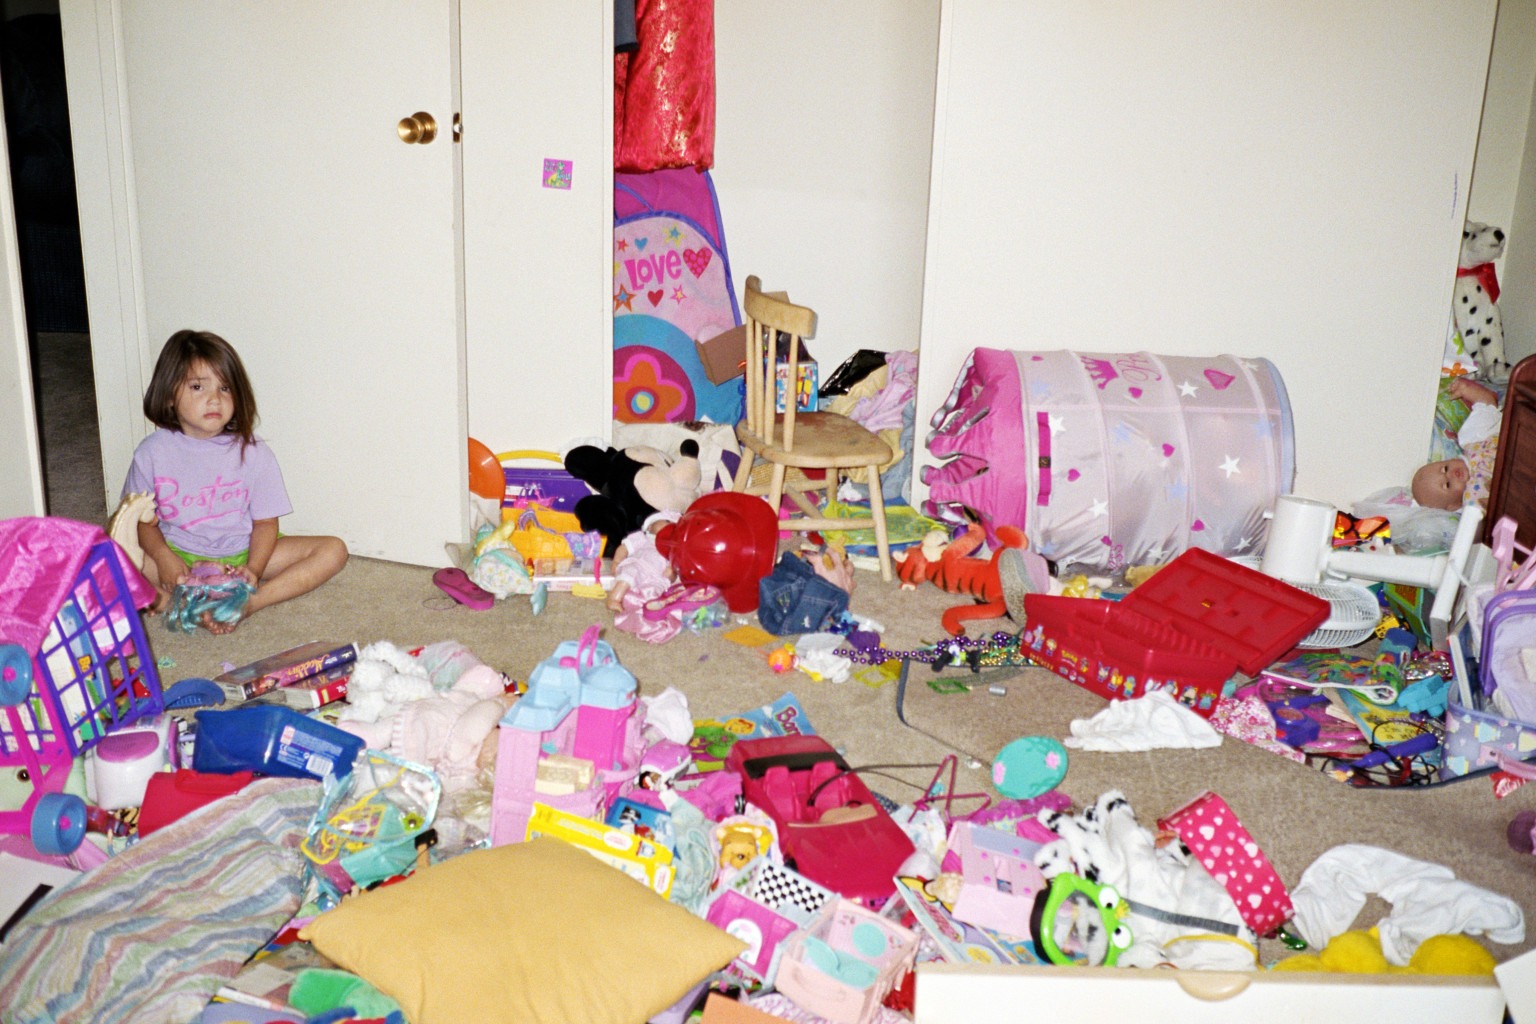 Girl (4-6) sitting on floor in messy room